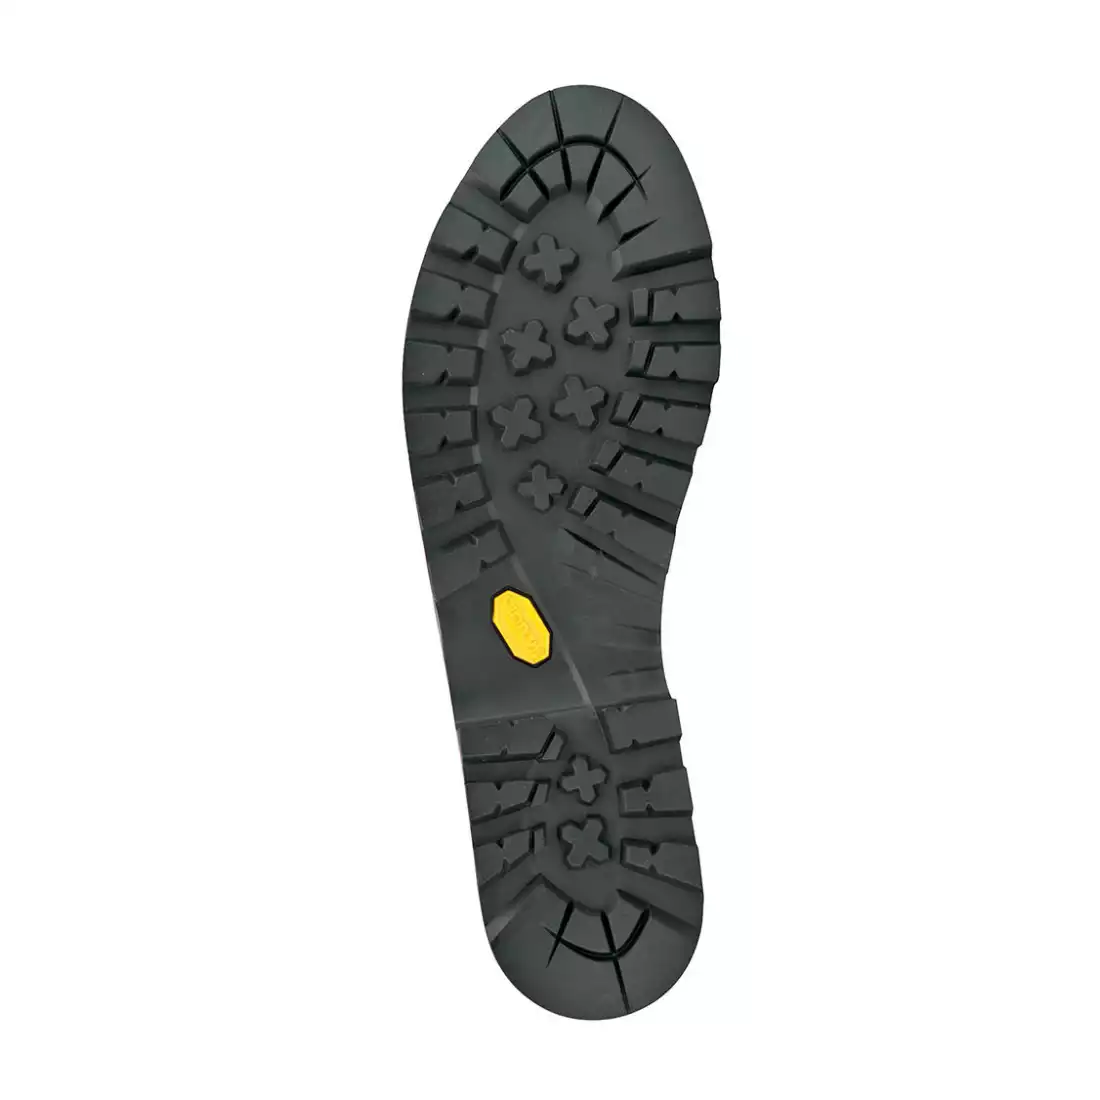 KAYLAND CROSS MOUNTAIN GTX Pantofi de trekking pentru bărbați, GORE-TEX, VIBRAM,negru și roșu